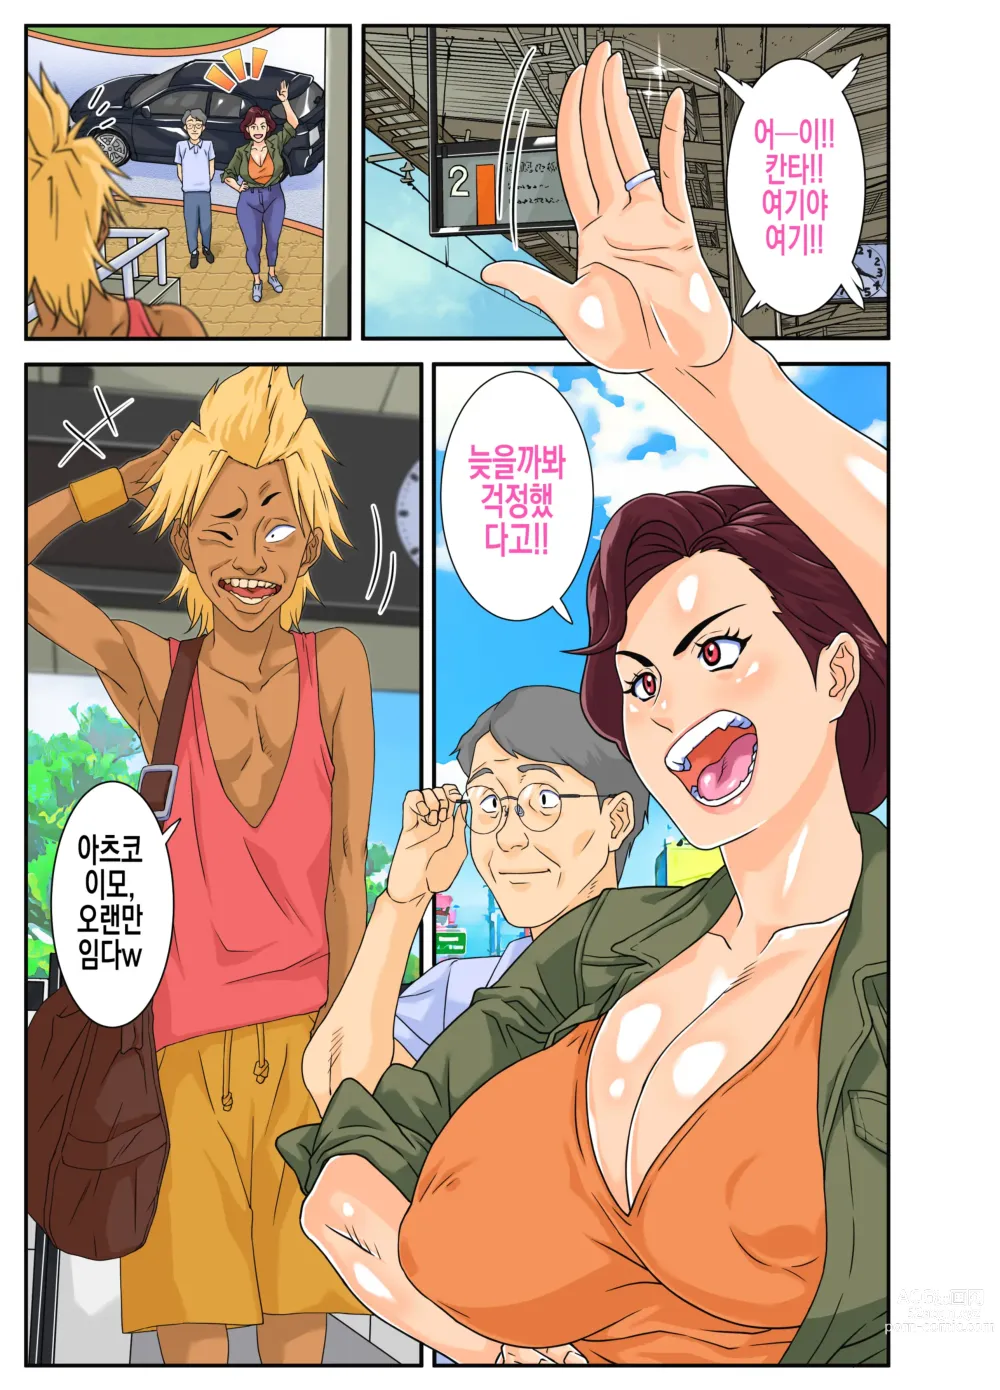 Page 2 of doujinshi 이모 따먹기.